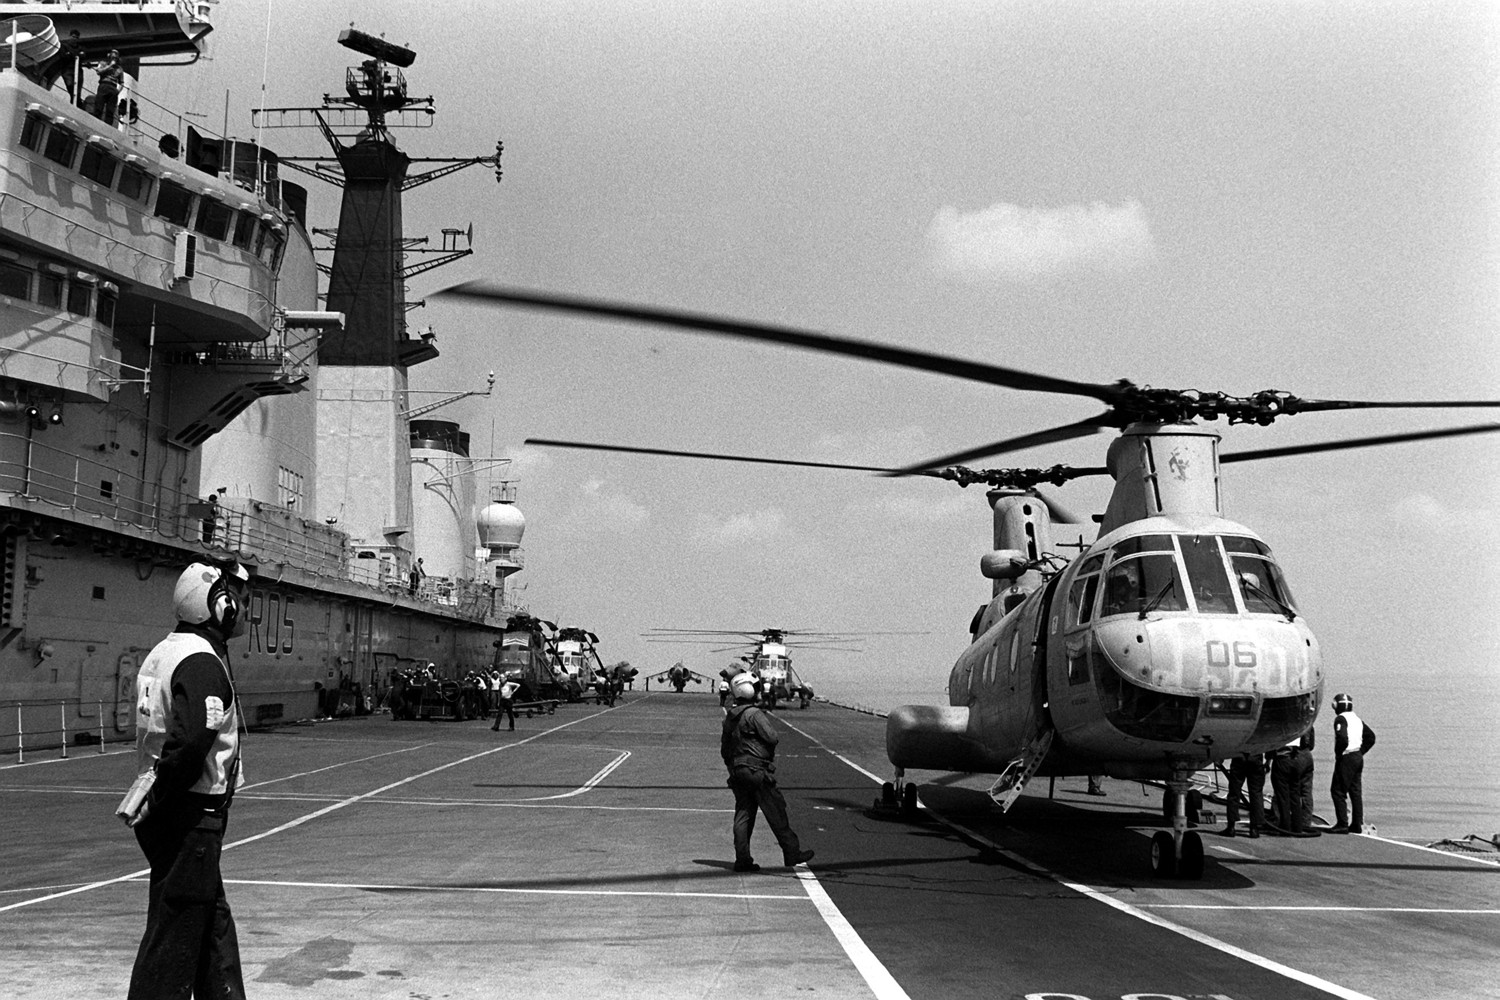 r-05 hms invincible class aircraft carrier royal navy 21